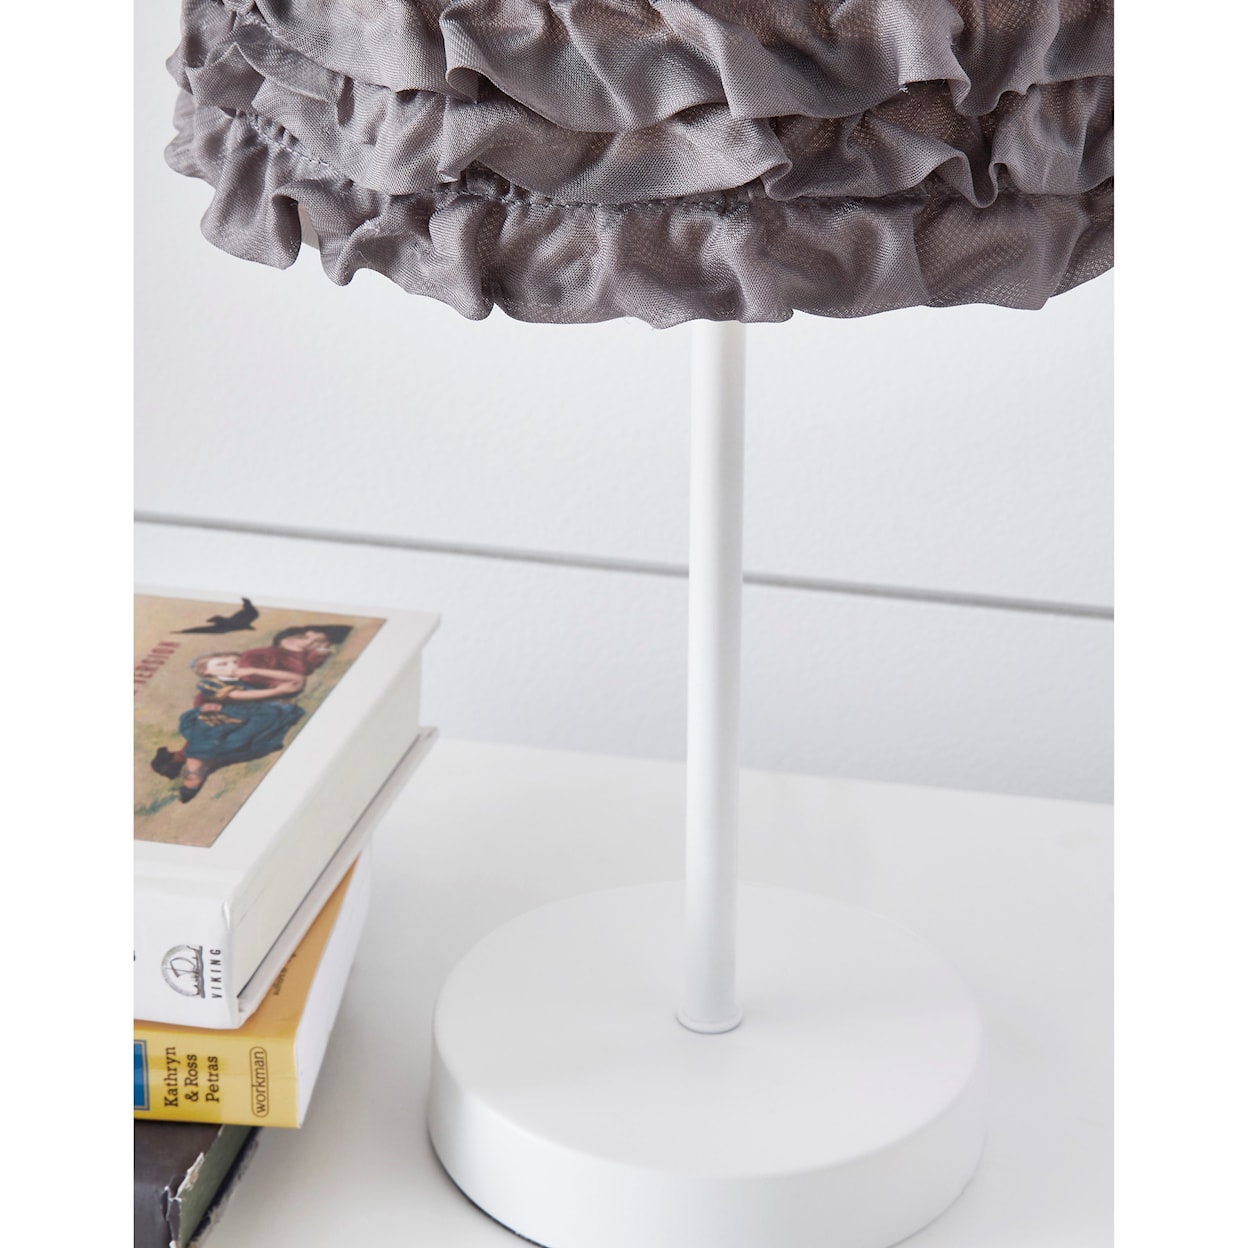 Ashley Signature Design Lamps - Casual Mirette Gray/White Metal Table Lamp